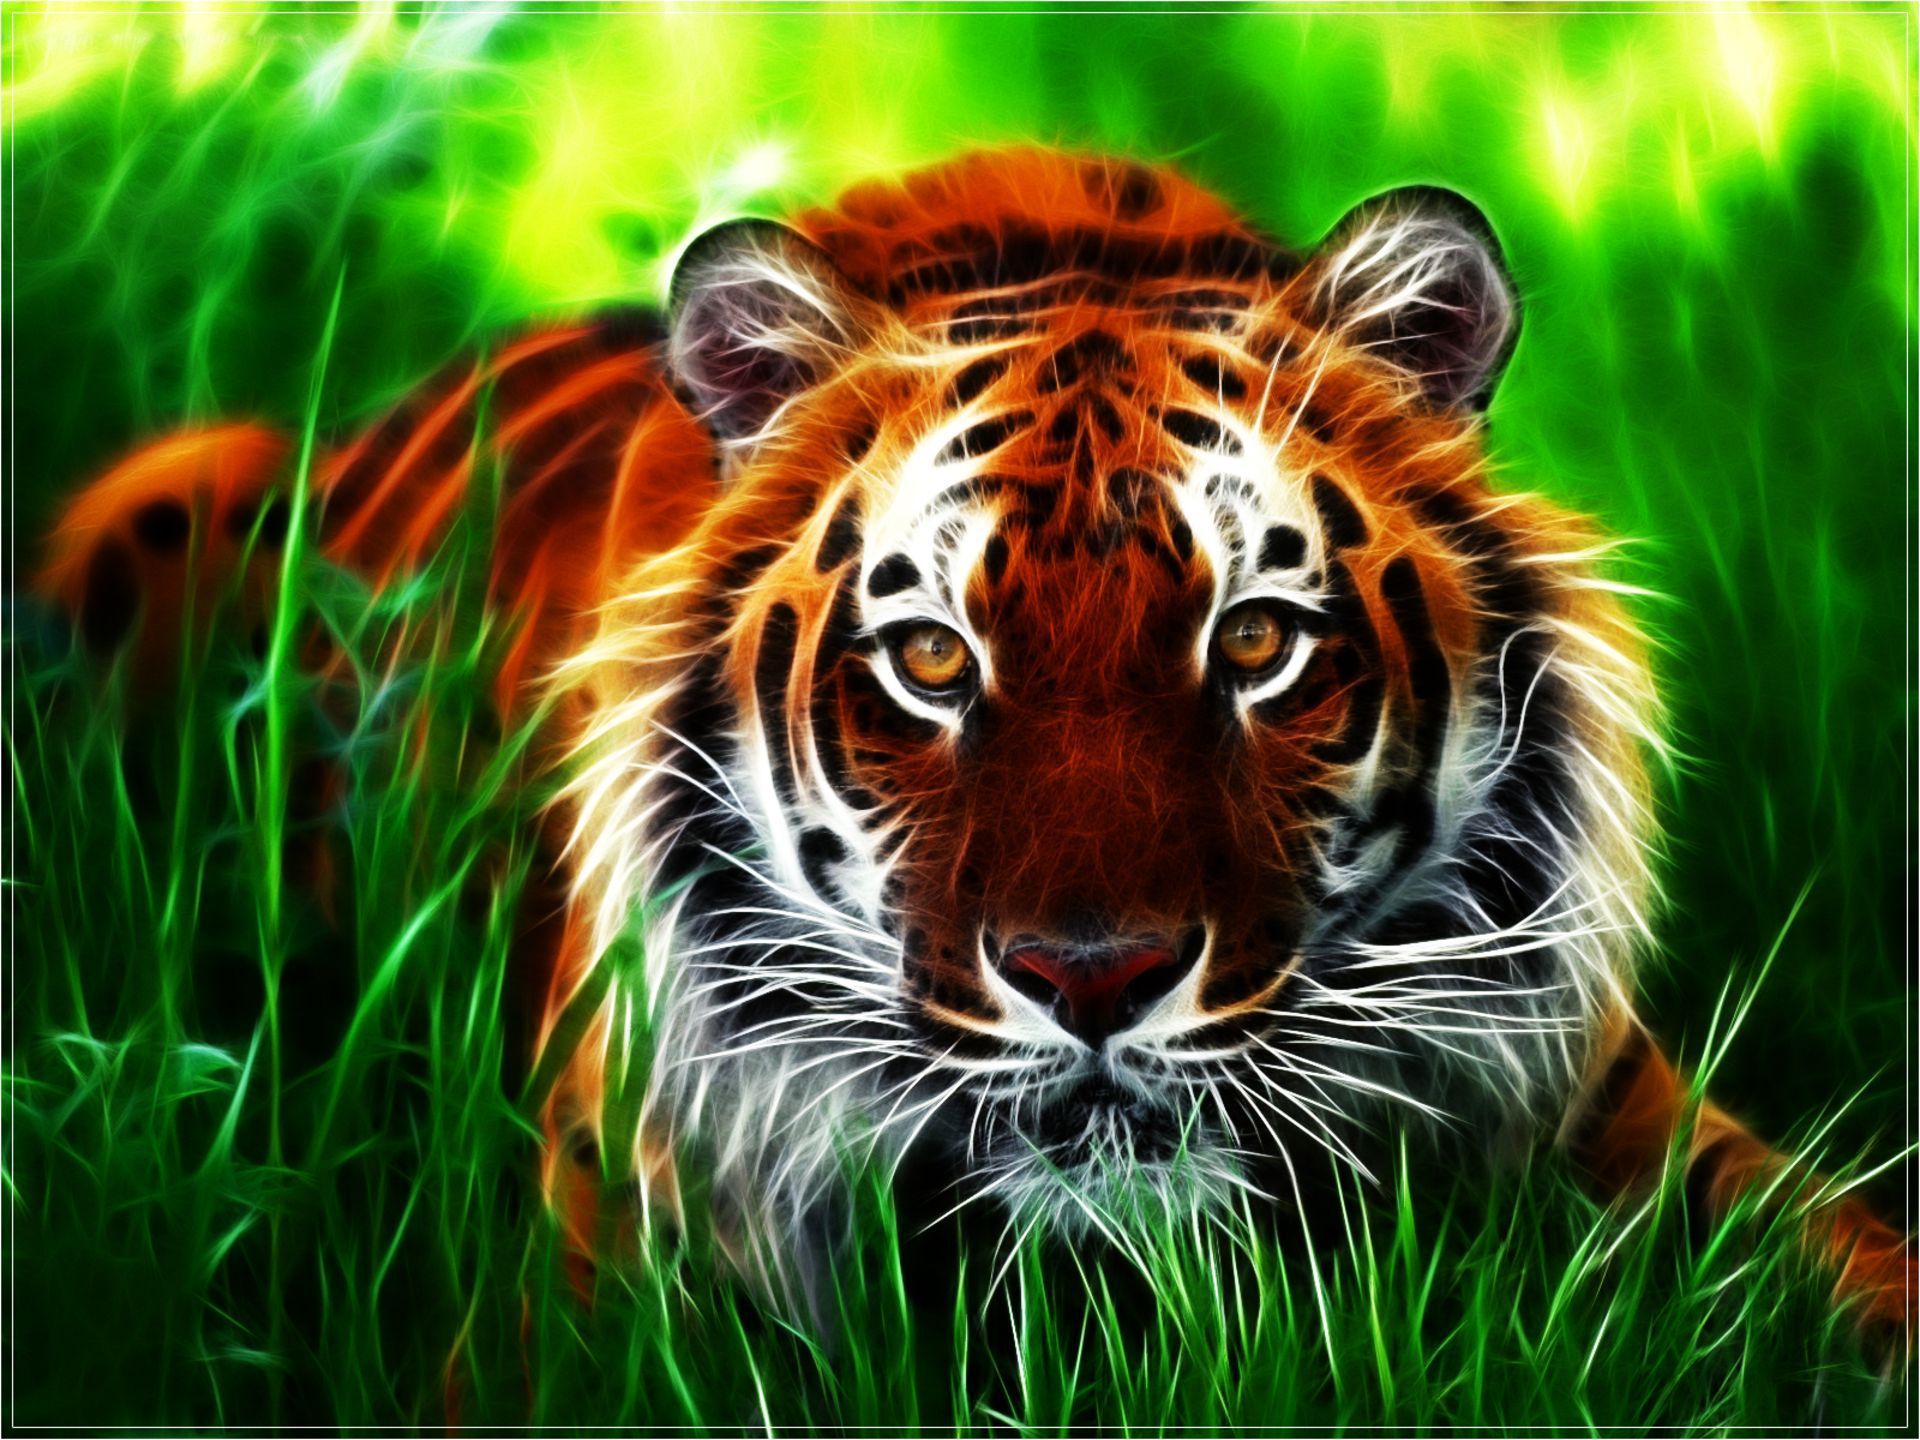 Animated Animal Hd Wallpapers | Free HD Desktop Wallpapers ...